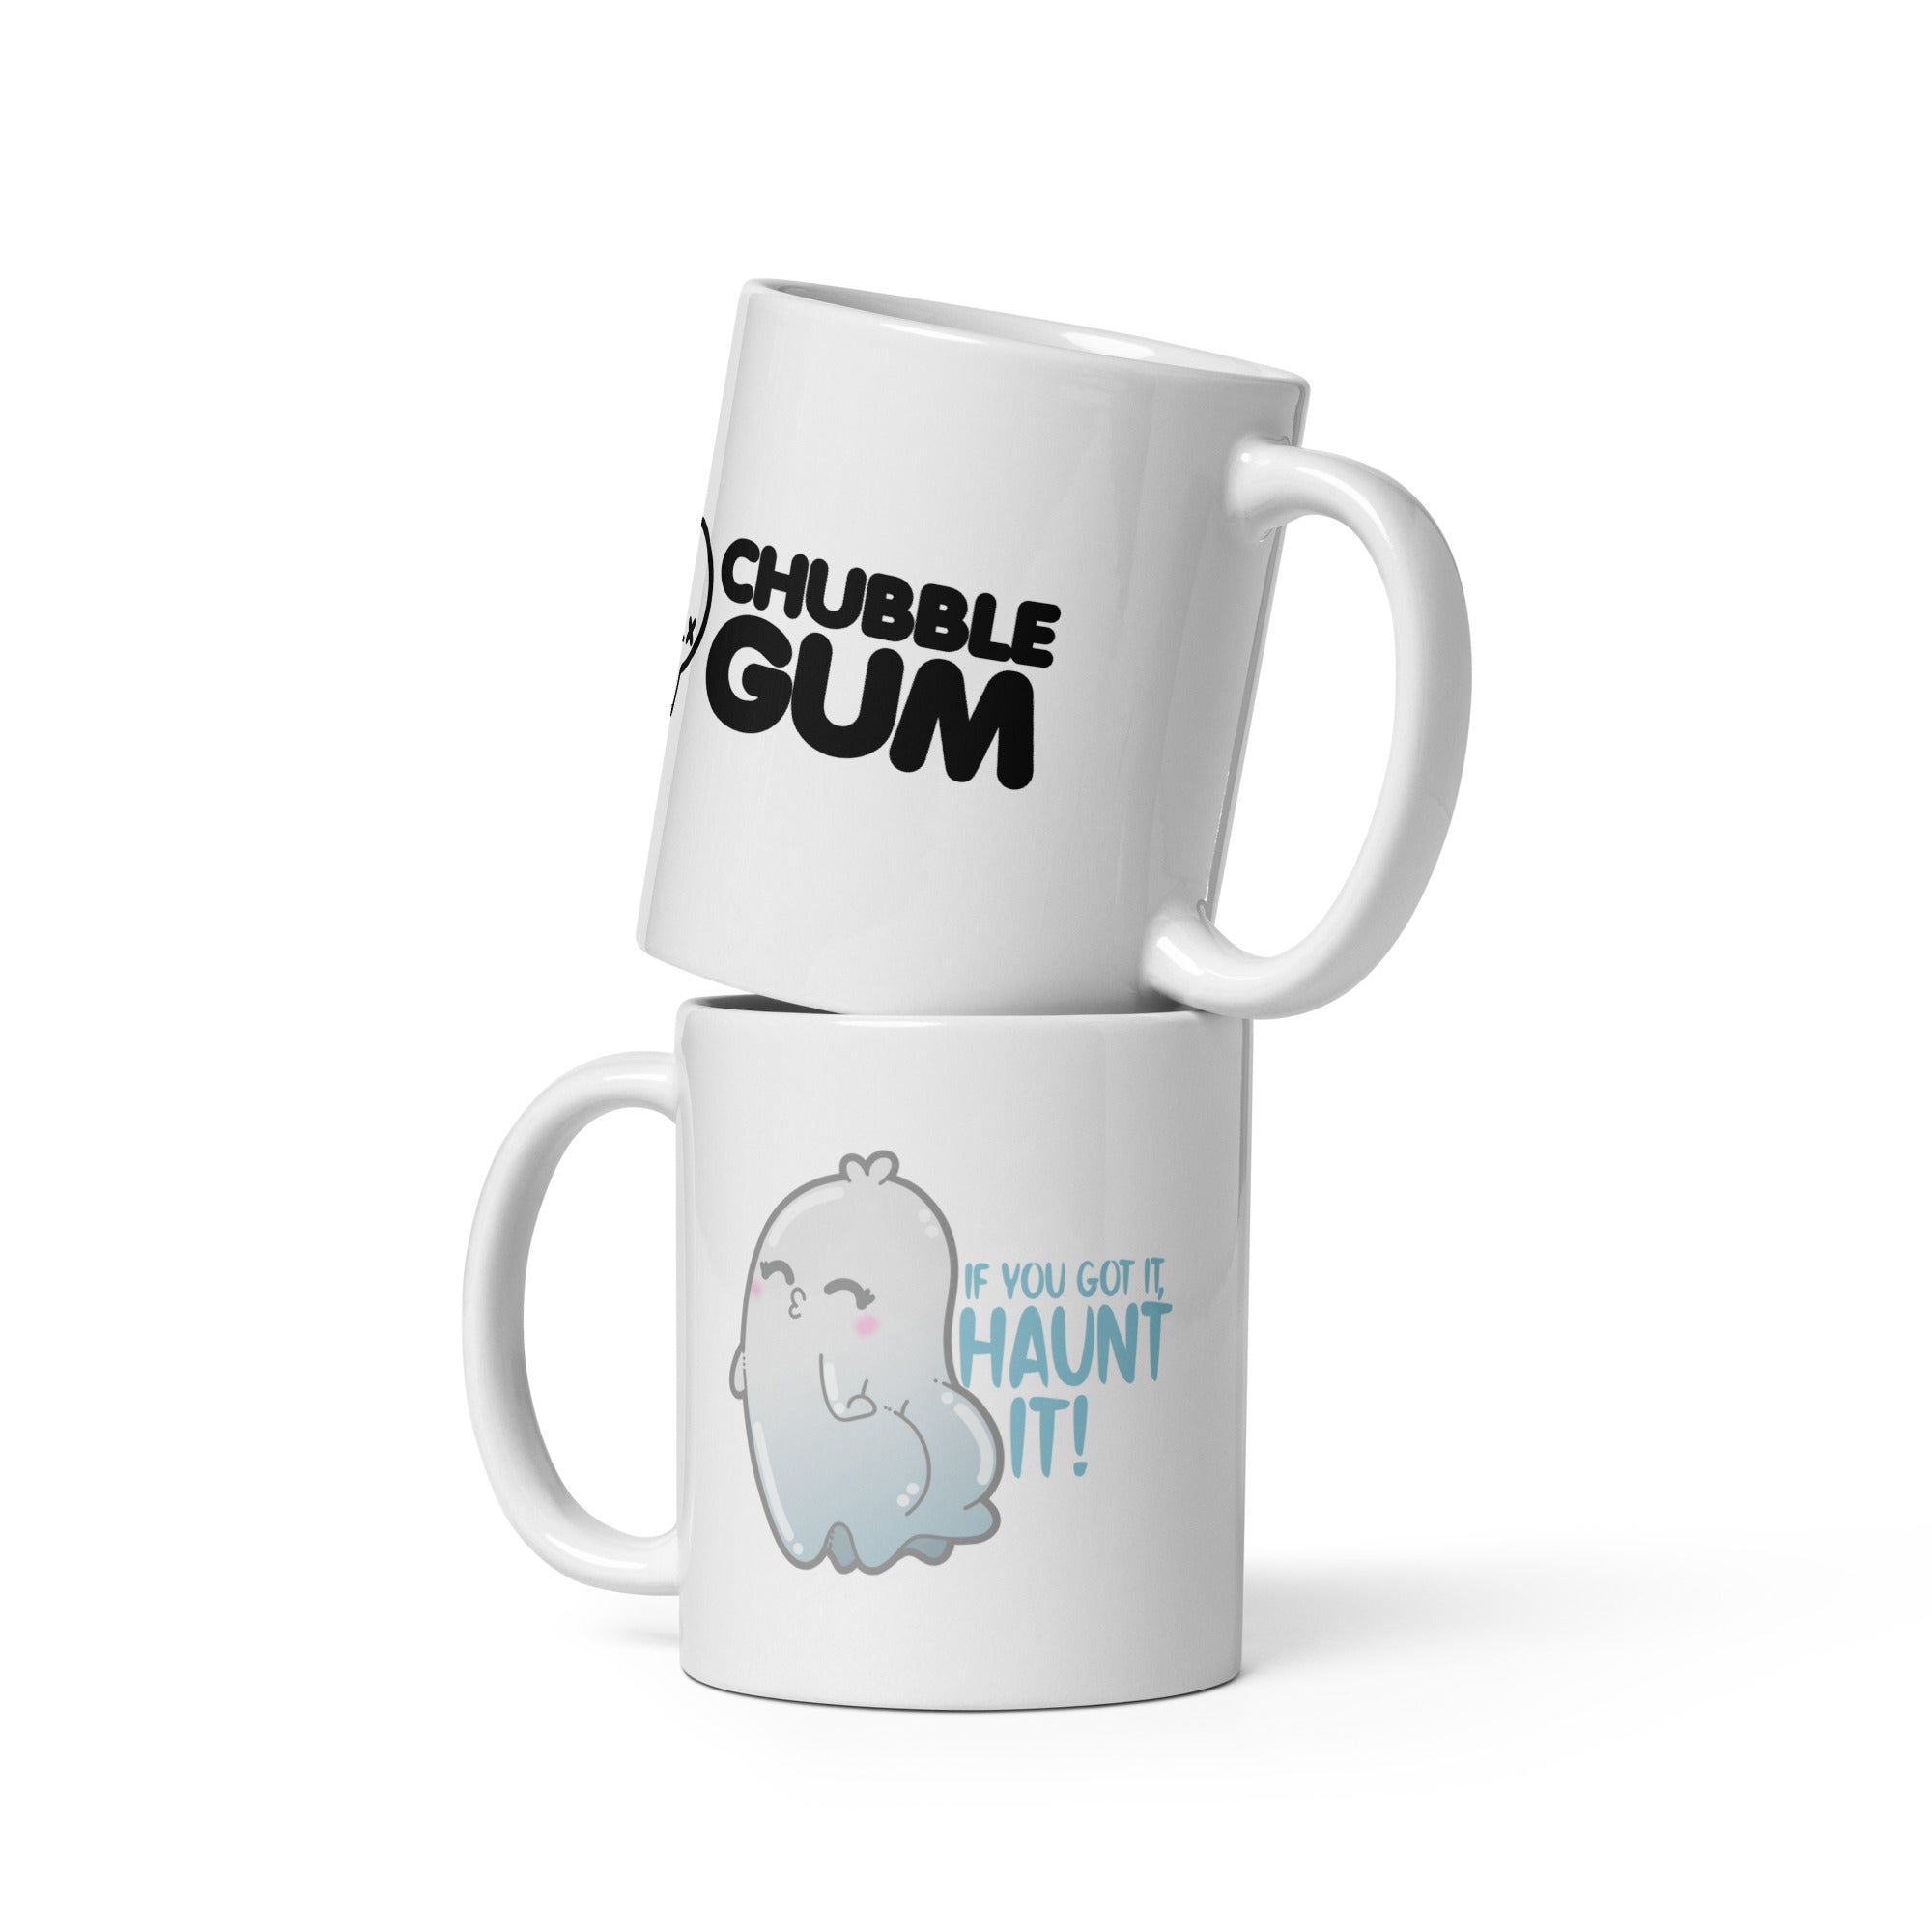 IF YOU GOT IT HAUNT IT - Coffee Mug - ChubbleGumLLC